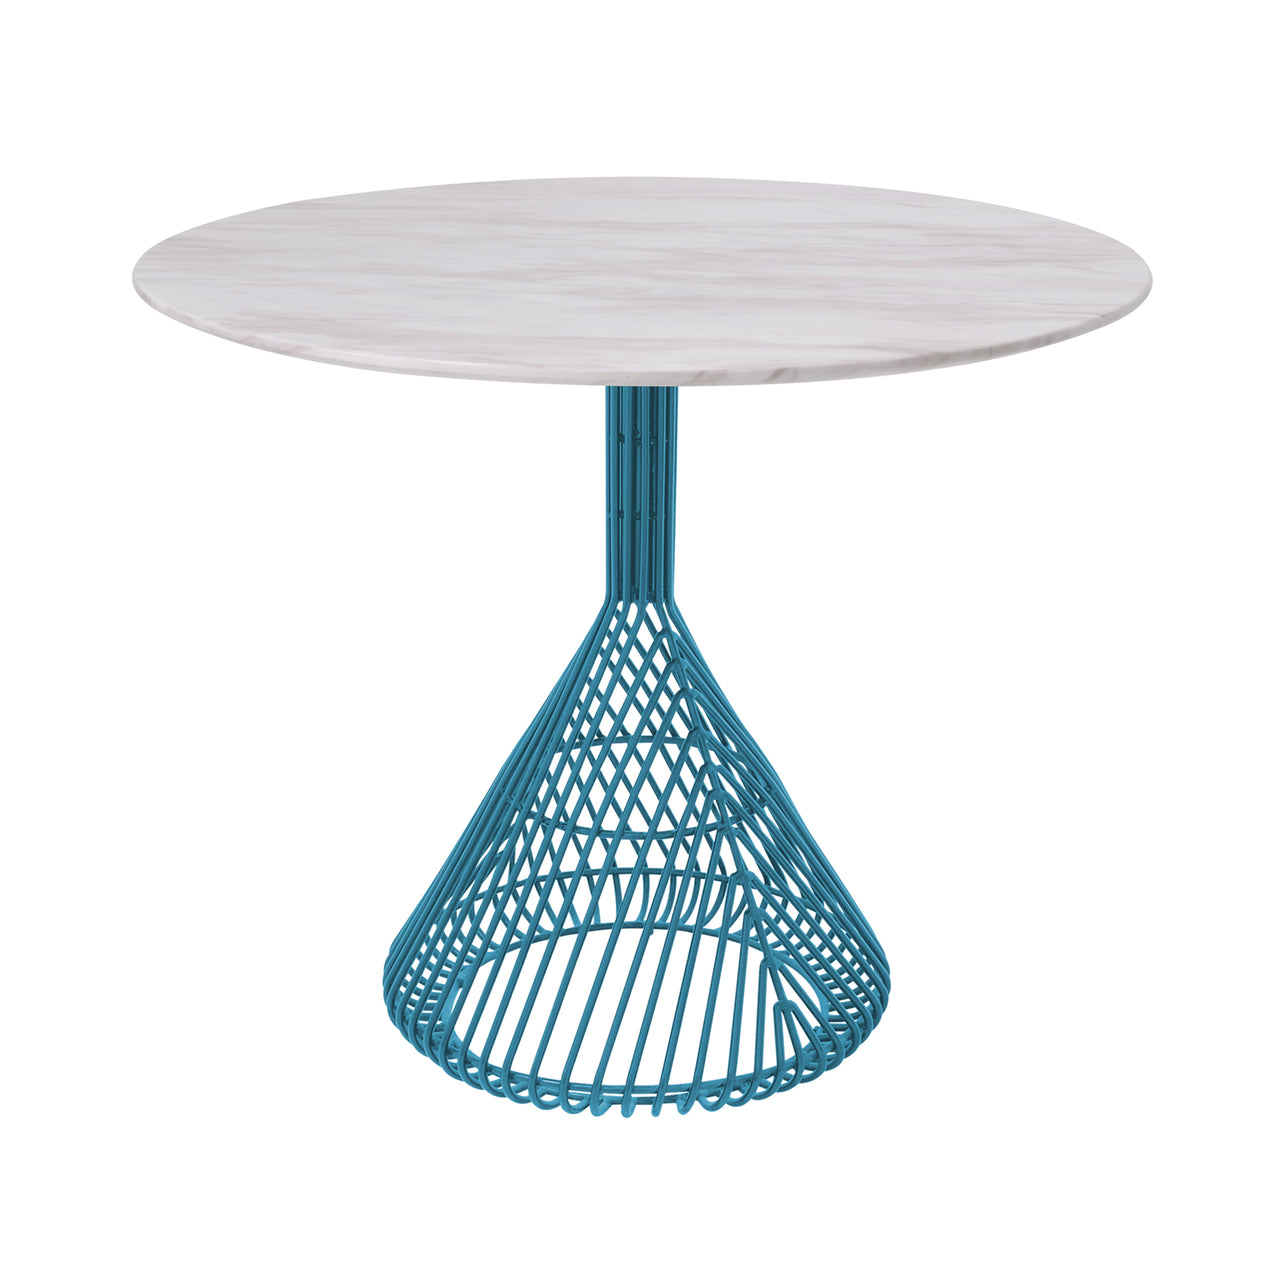 Bistro Dining Table: Peacock Blue + White Ceramic